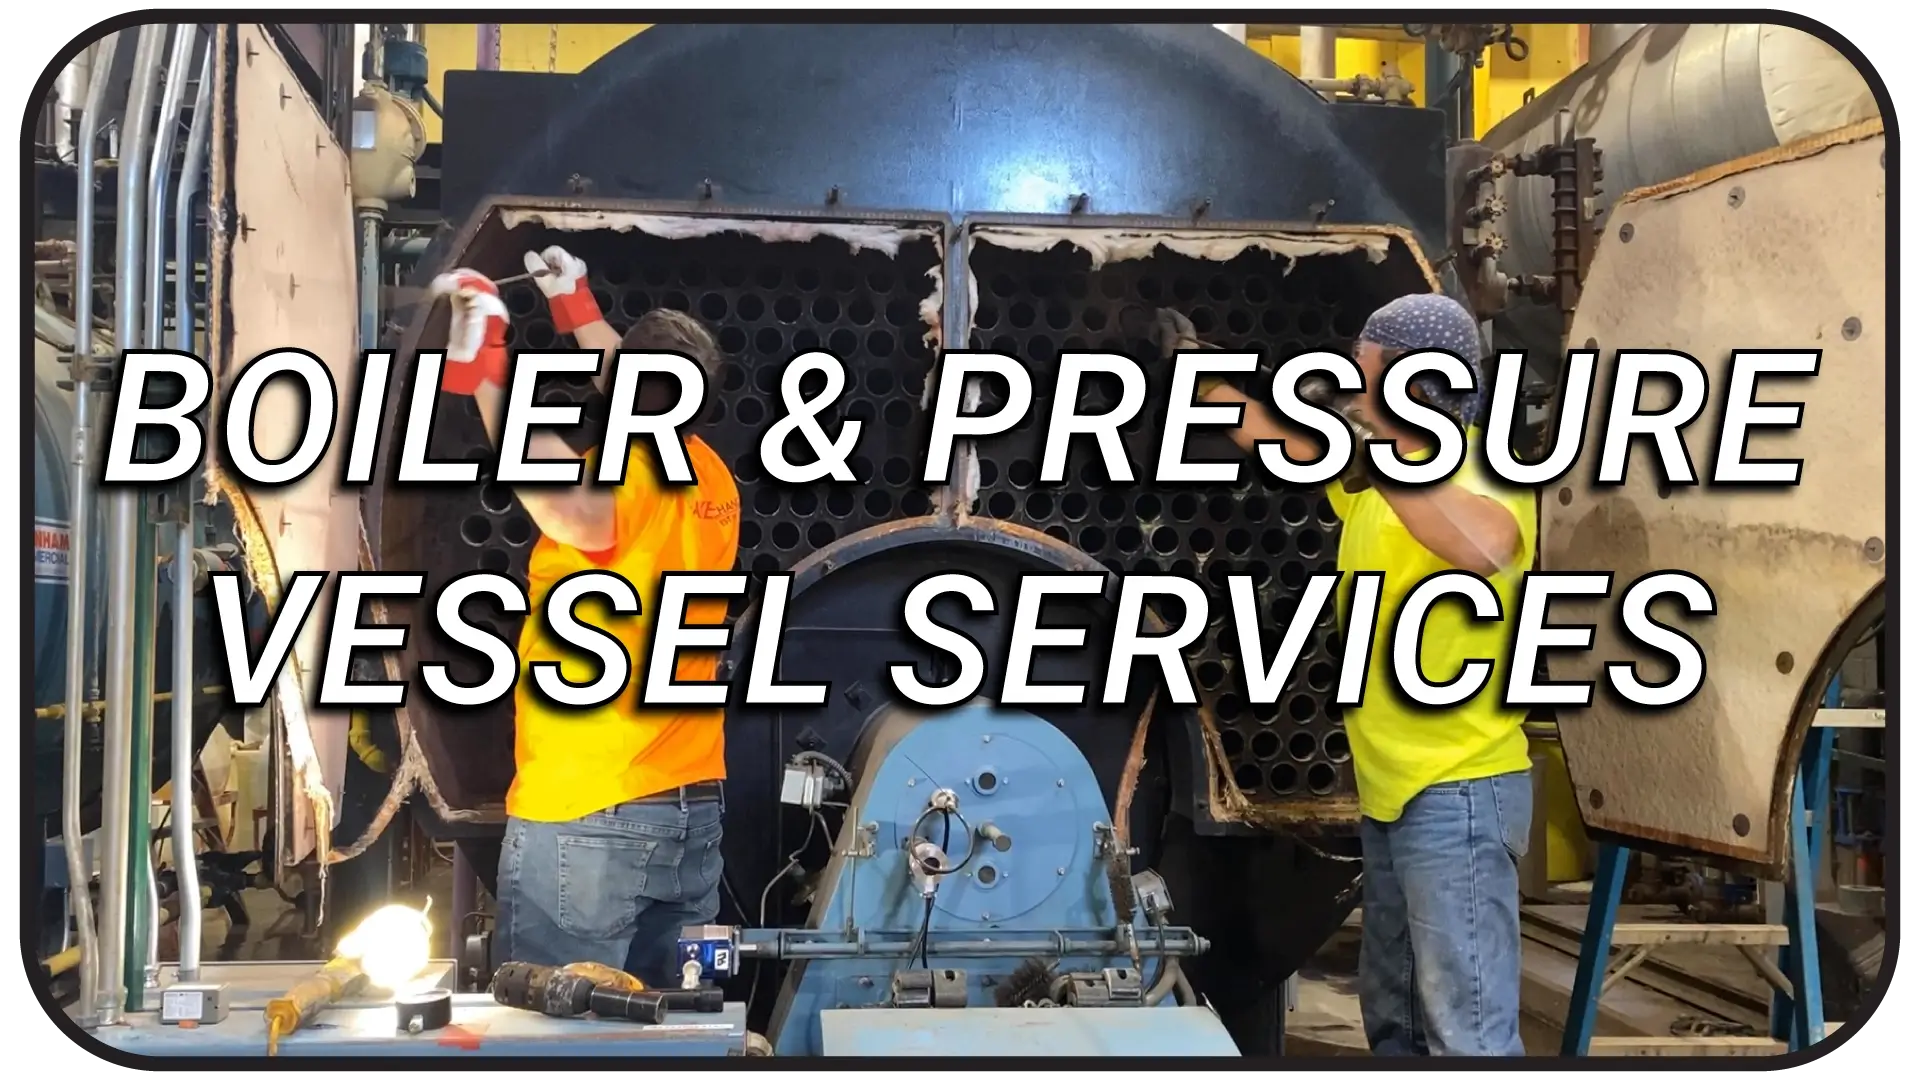 boiler & pressure vessel services